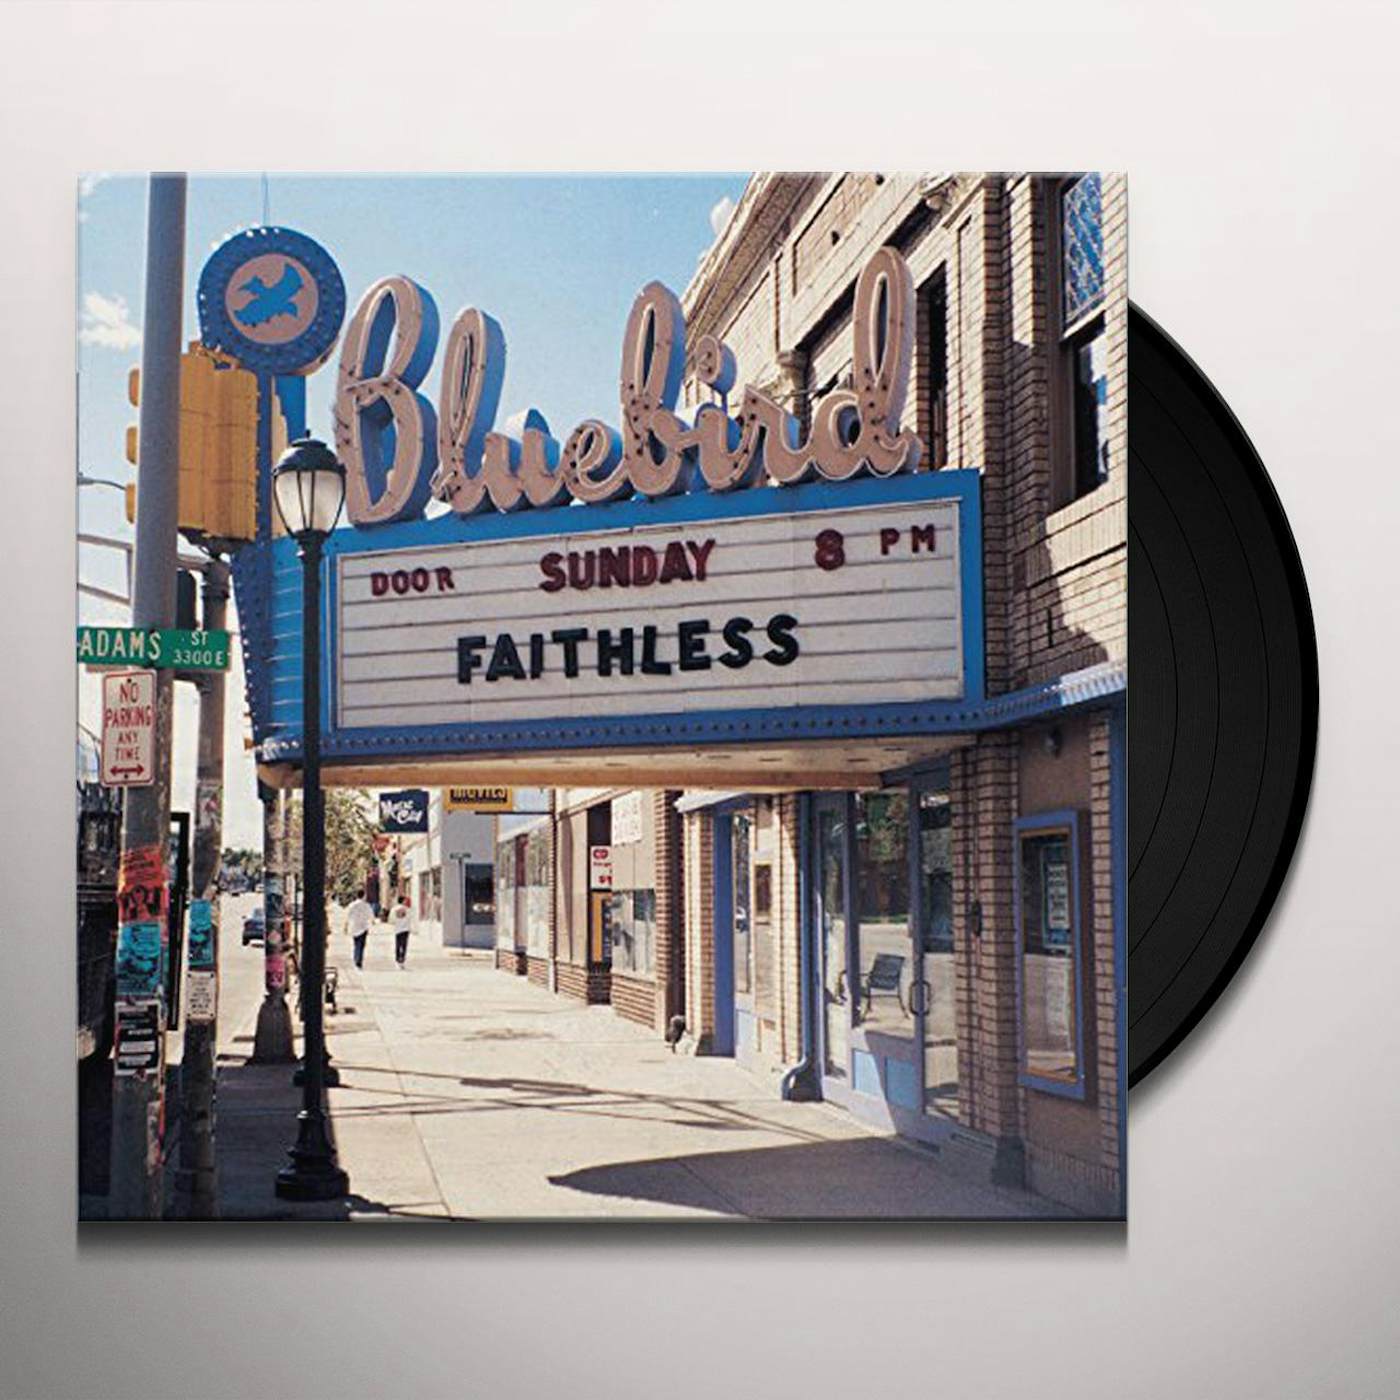 Faithless Sunday 8pm Vinyl Record